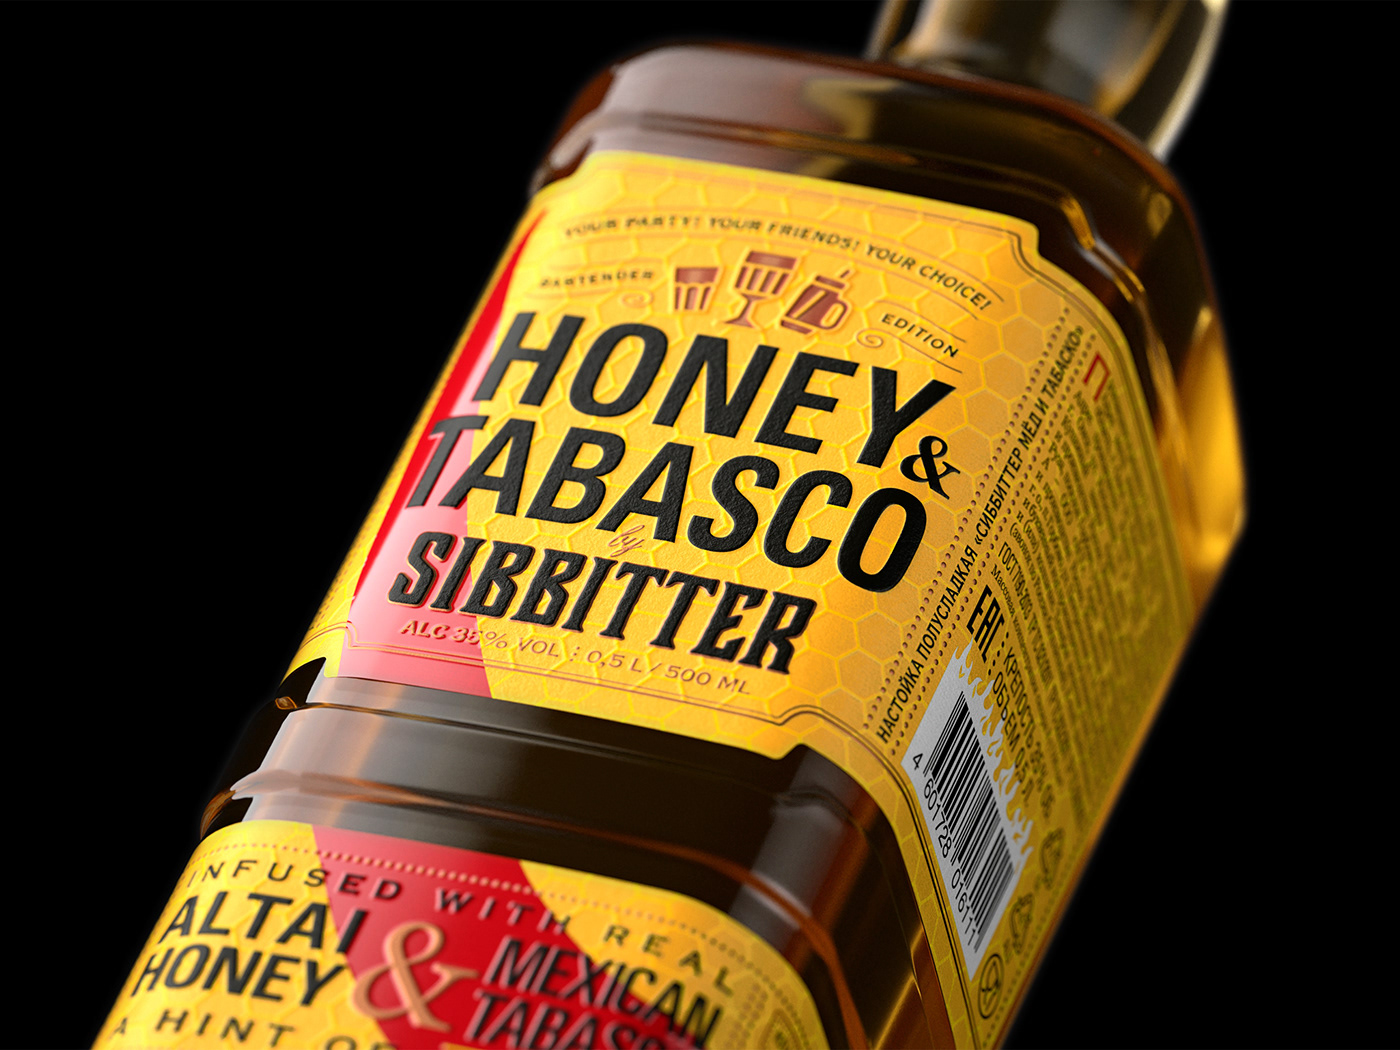 Altai bitter honey SIBBITTER tabasco биттер мед настойка перец Сиббиттер